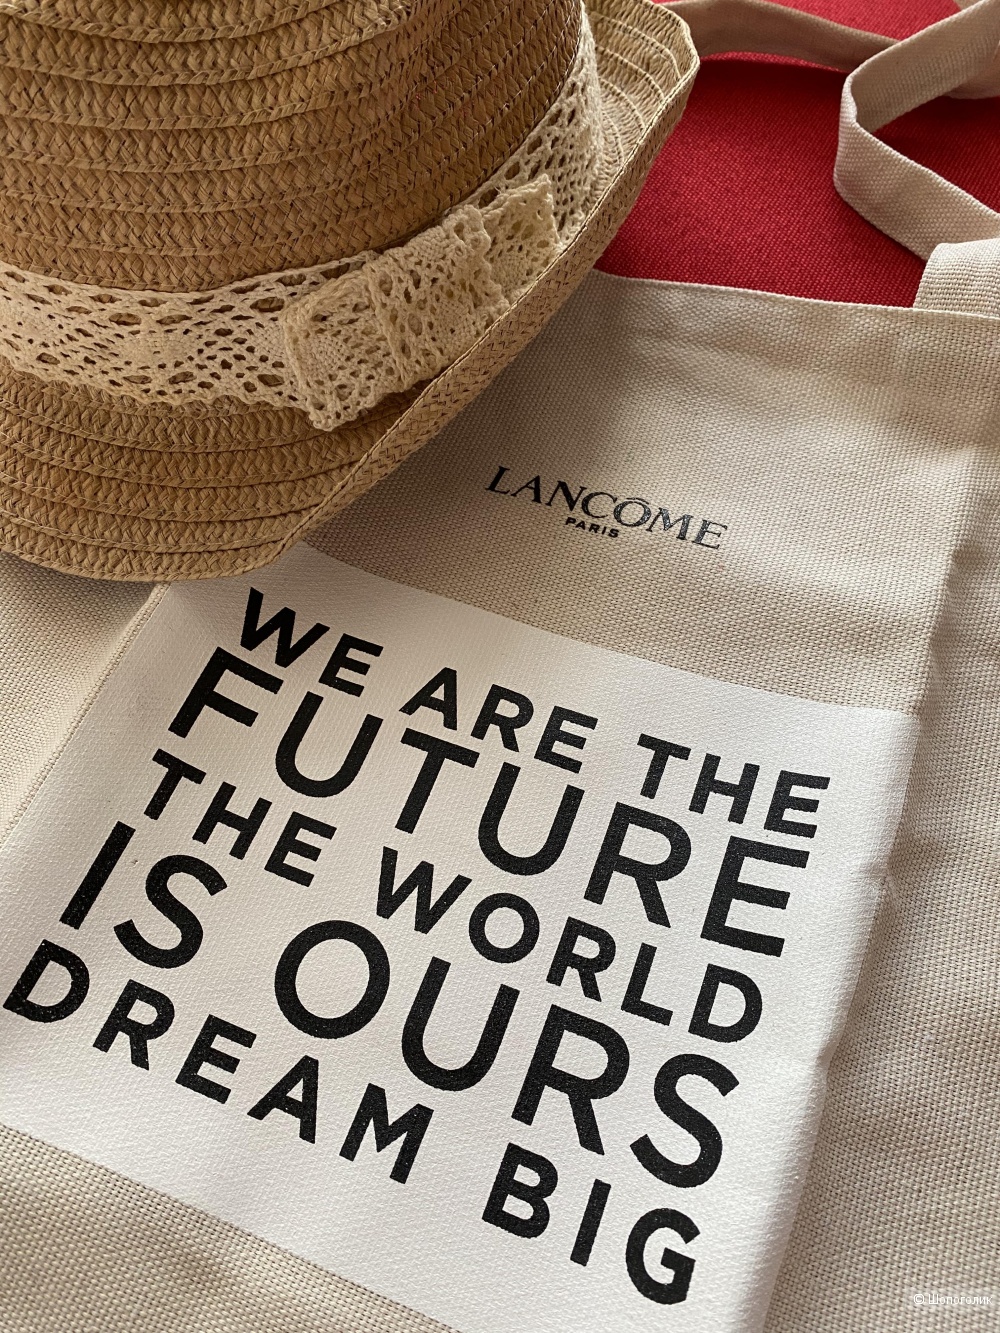 Пляжный набор Lancôme, one size